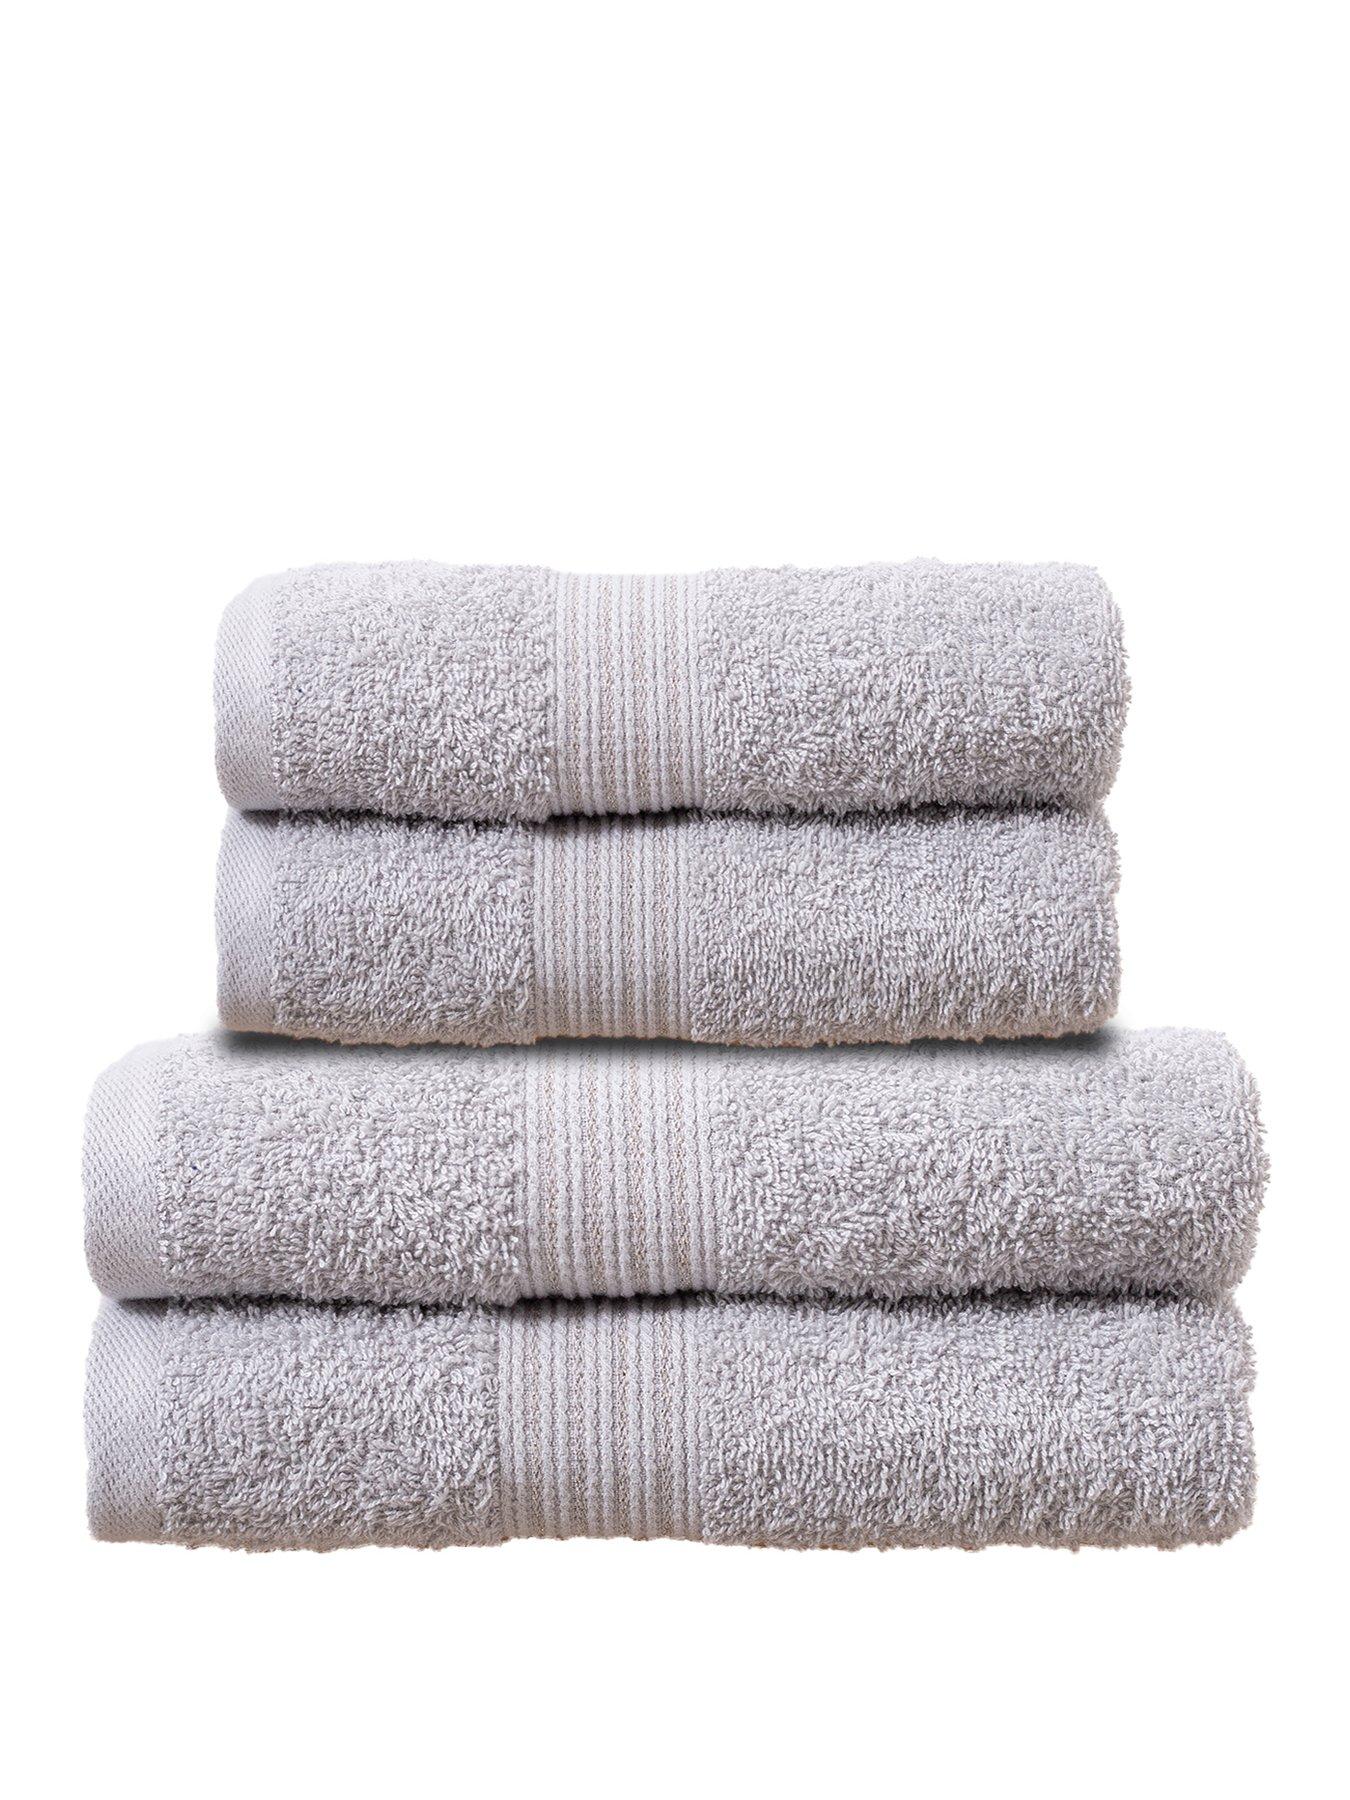 abercrombie Towels